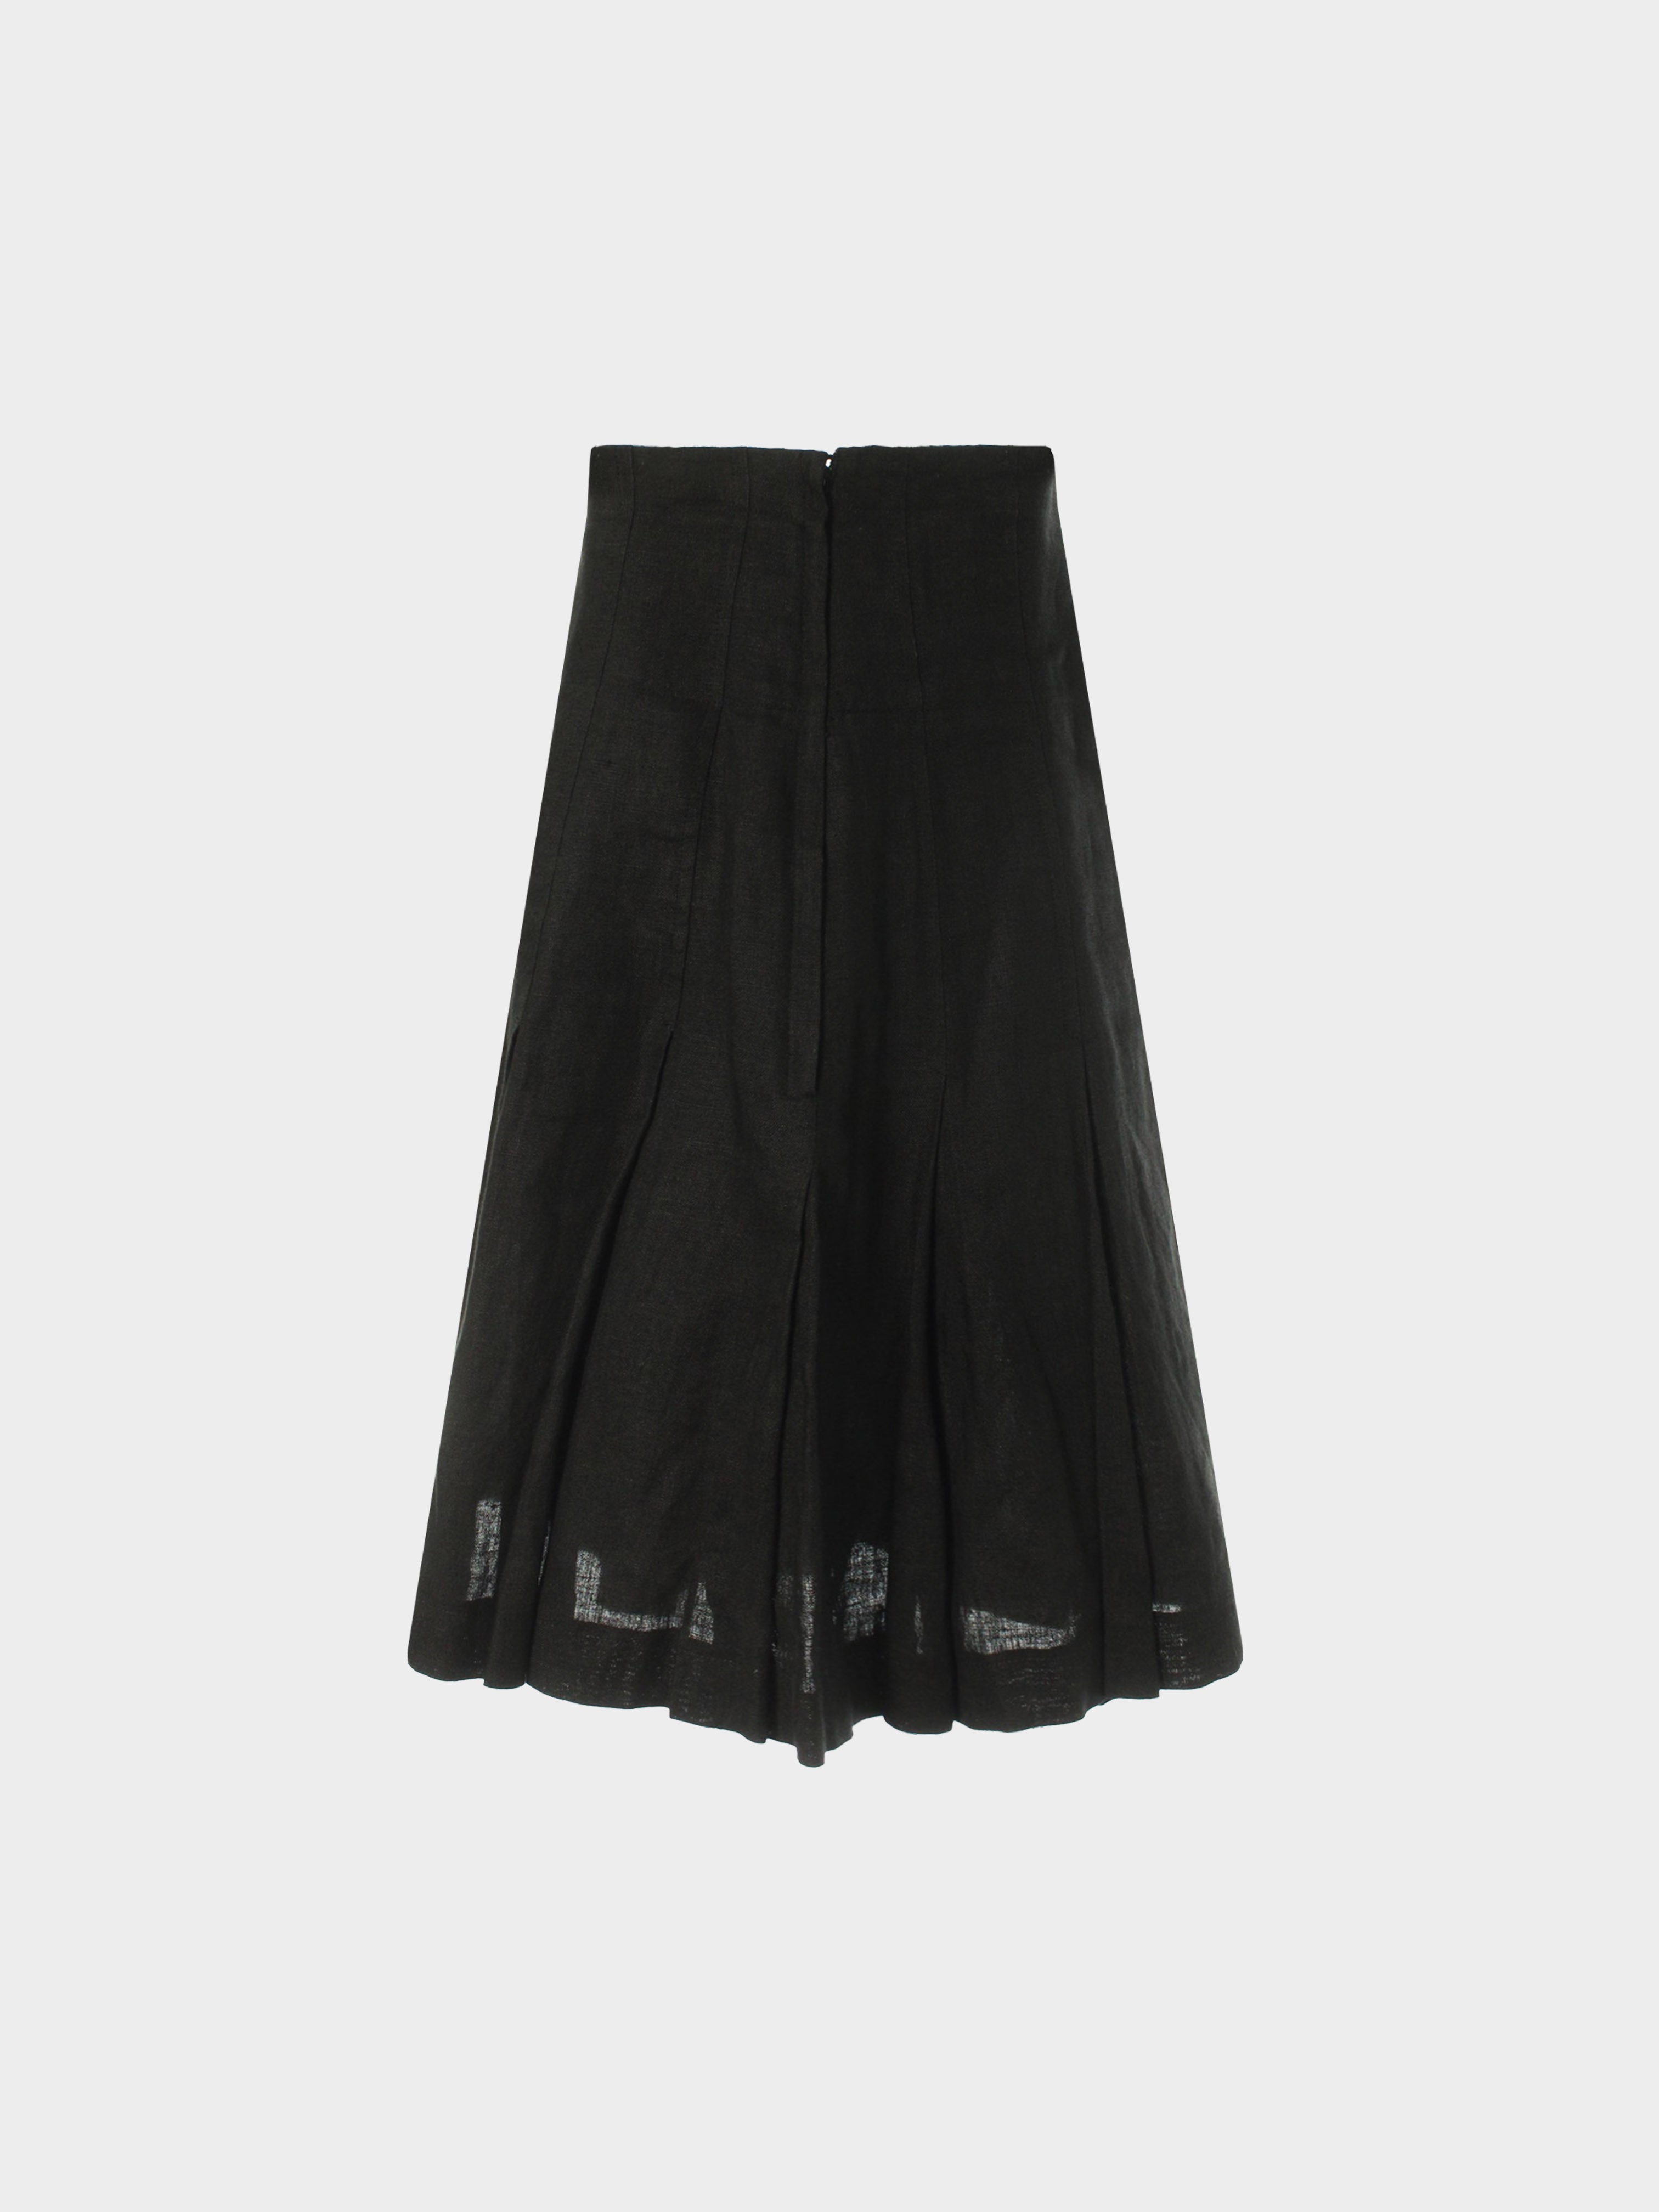 Comme des Garçons 1990s Black Linen Pleated Skirt